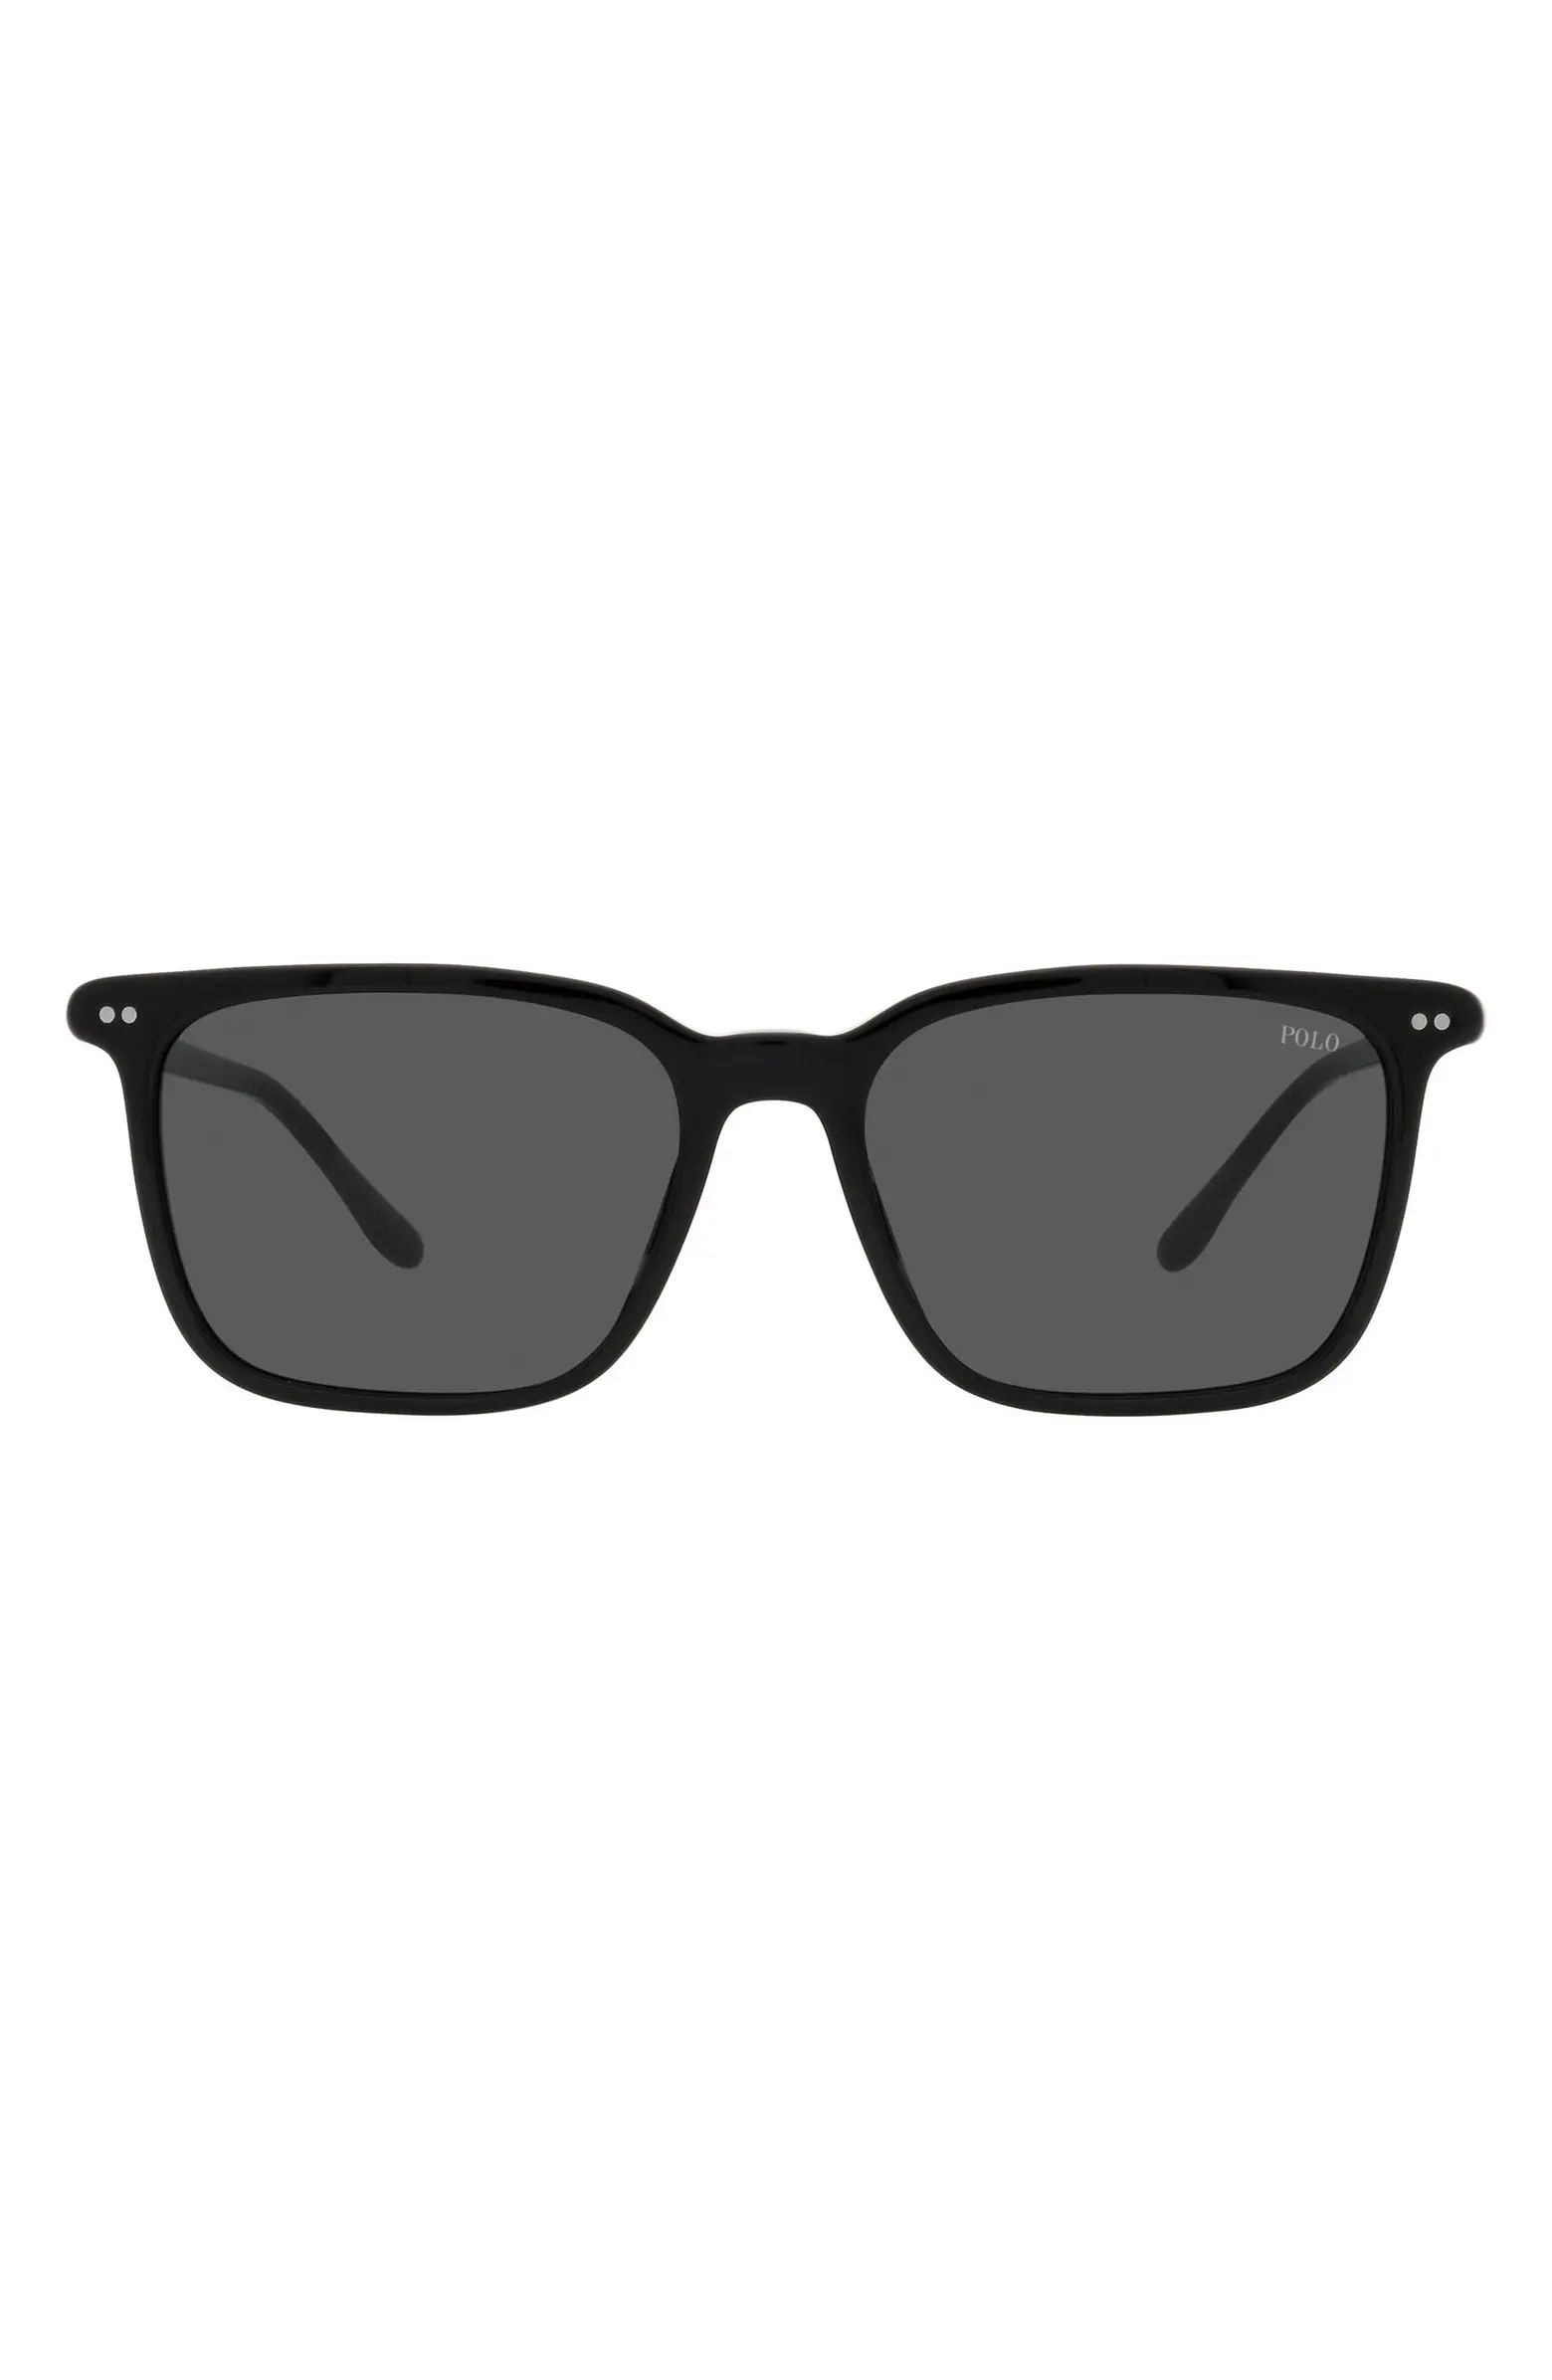 Polo Ralph Lauren 56mm Square Sunglasses | Nordstrom | Nordstrom